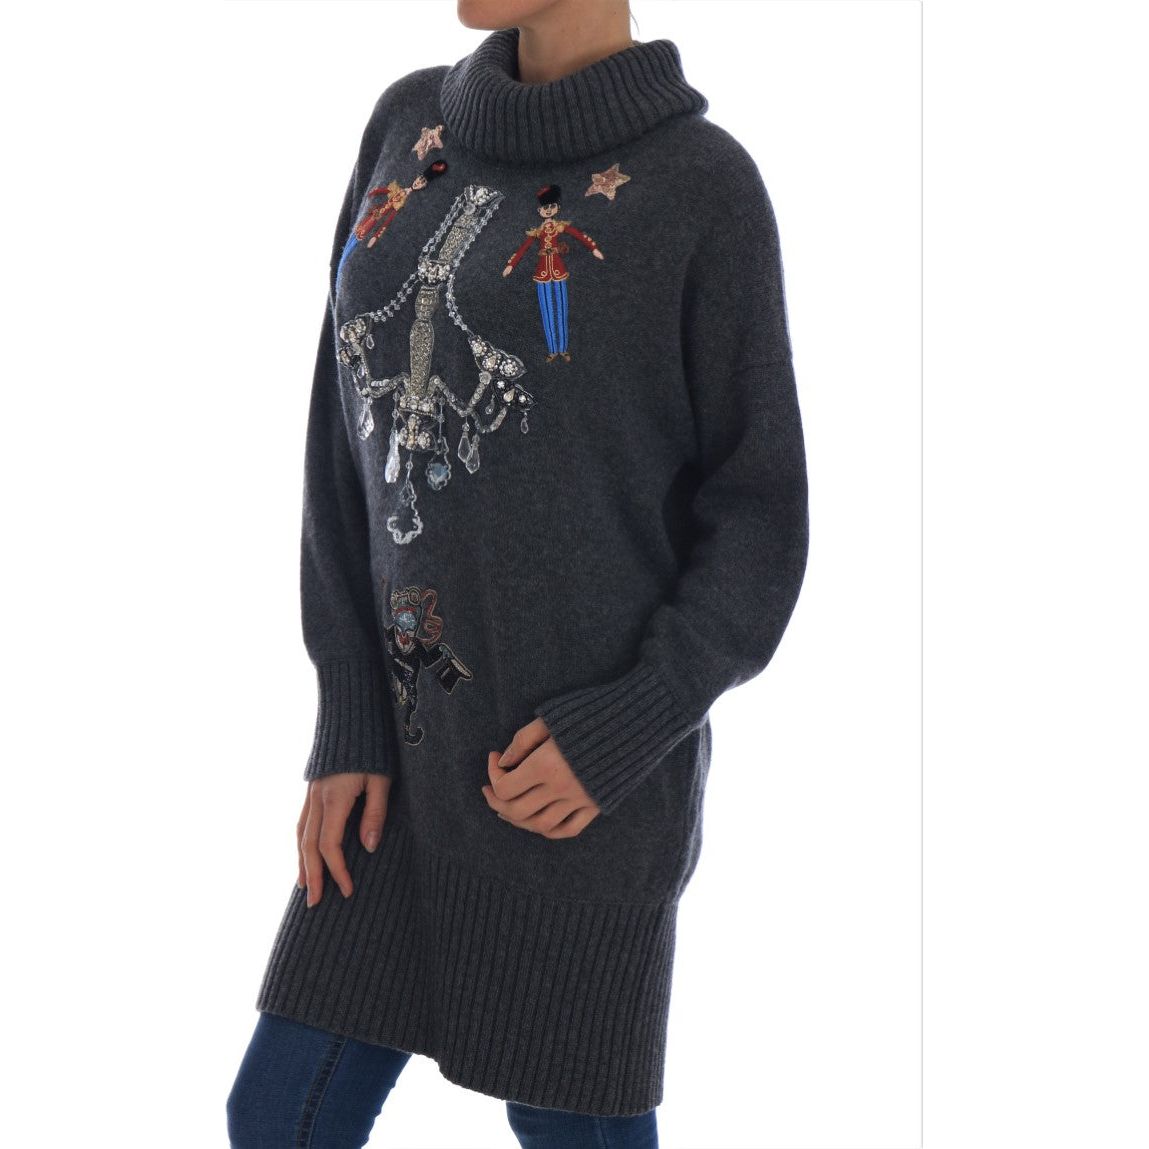 Dolce & Gabbana Fairy Tale Crystal Gray Cashmere Sweater fairy-tale-crystal-gray-cashmere-sweater 541660-fairy-tale-crystal-gray-cashmere-sweater-4.jpg